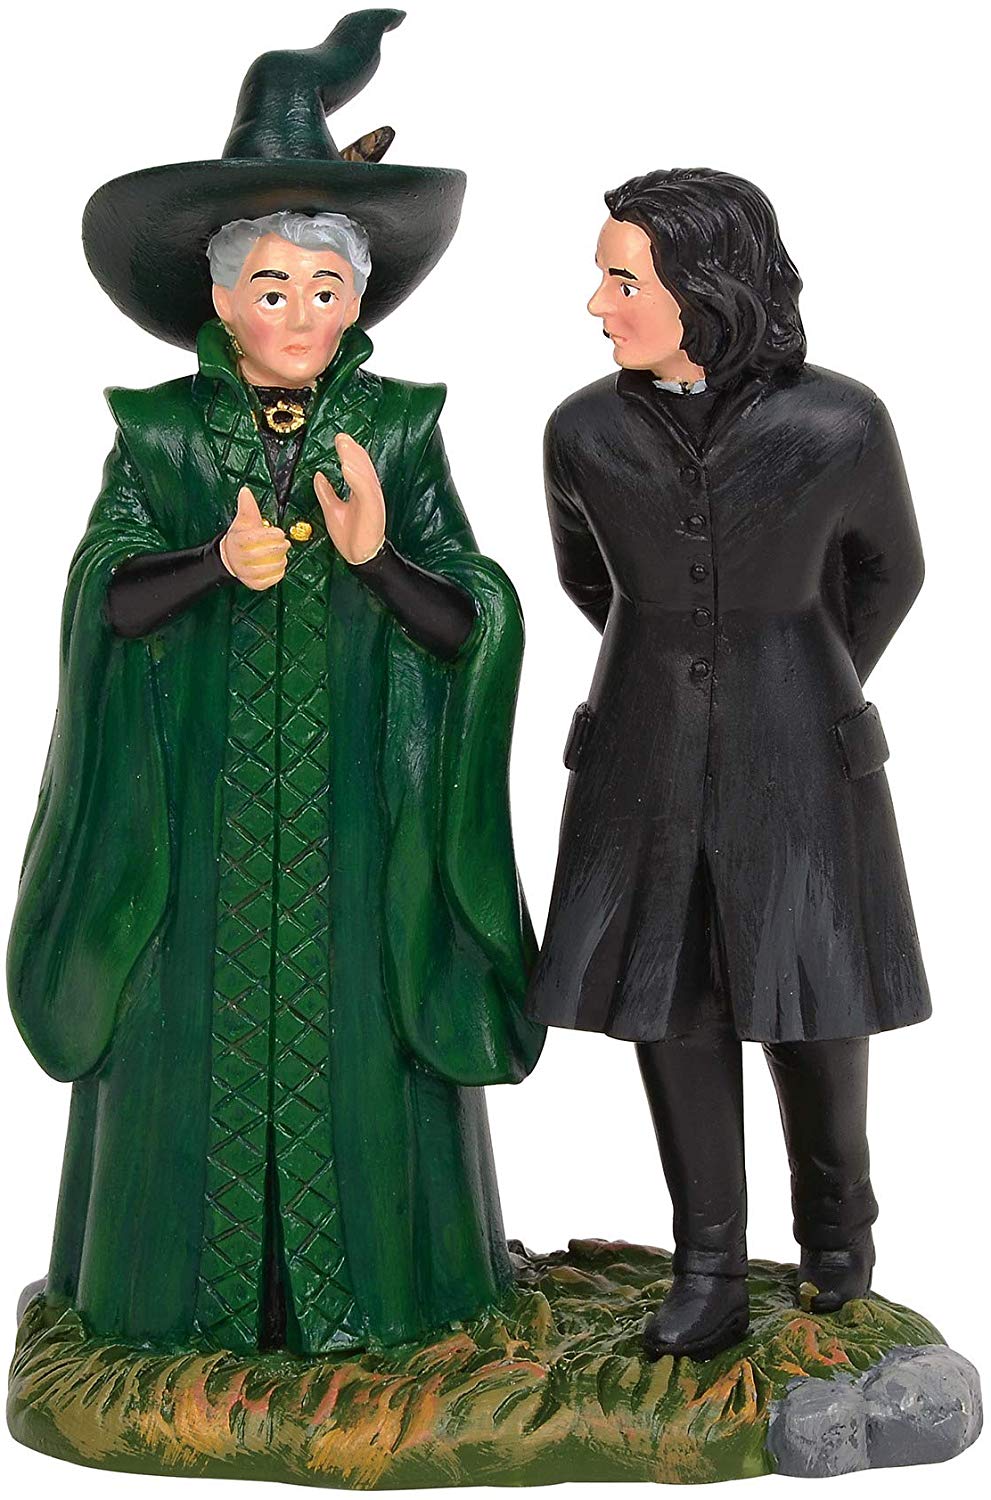 Department 56 Harry Potter Snape & McGonagall figurine